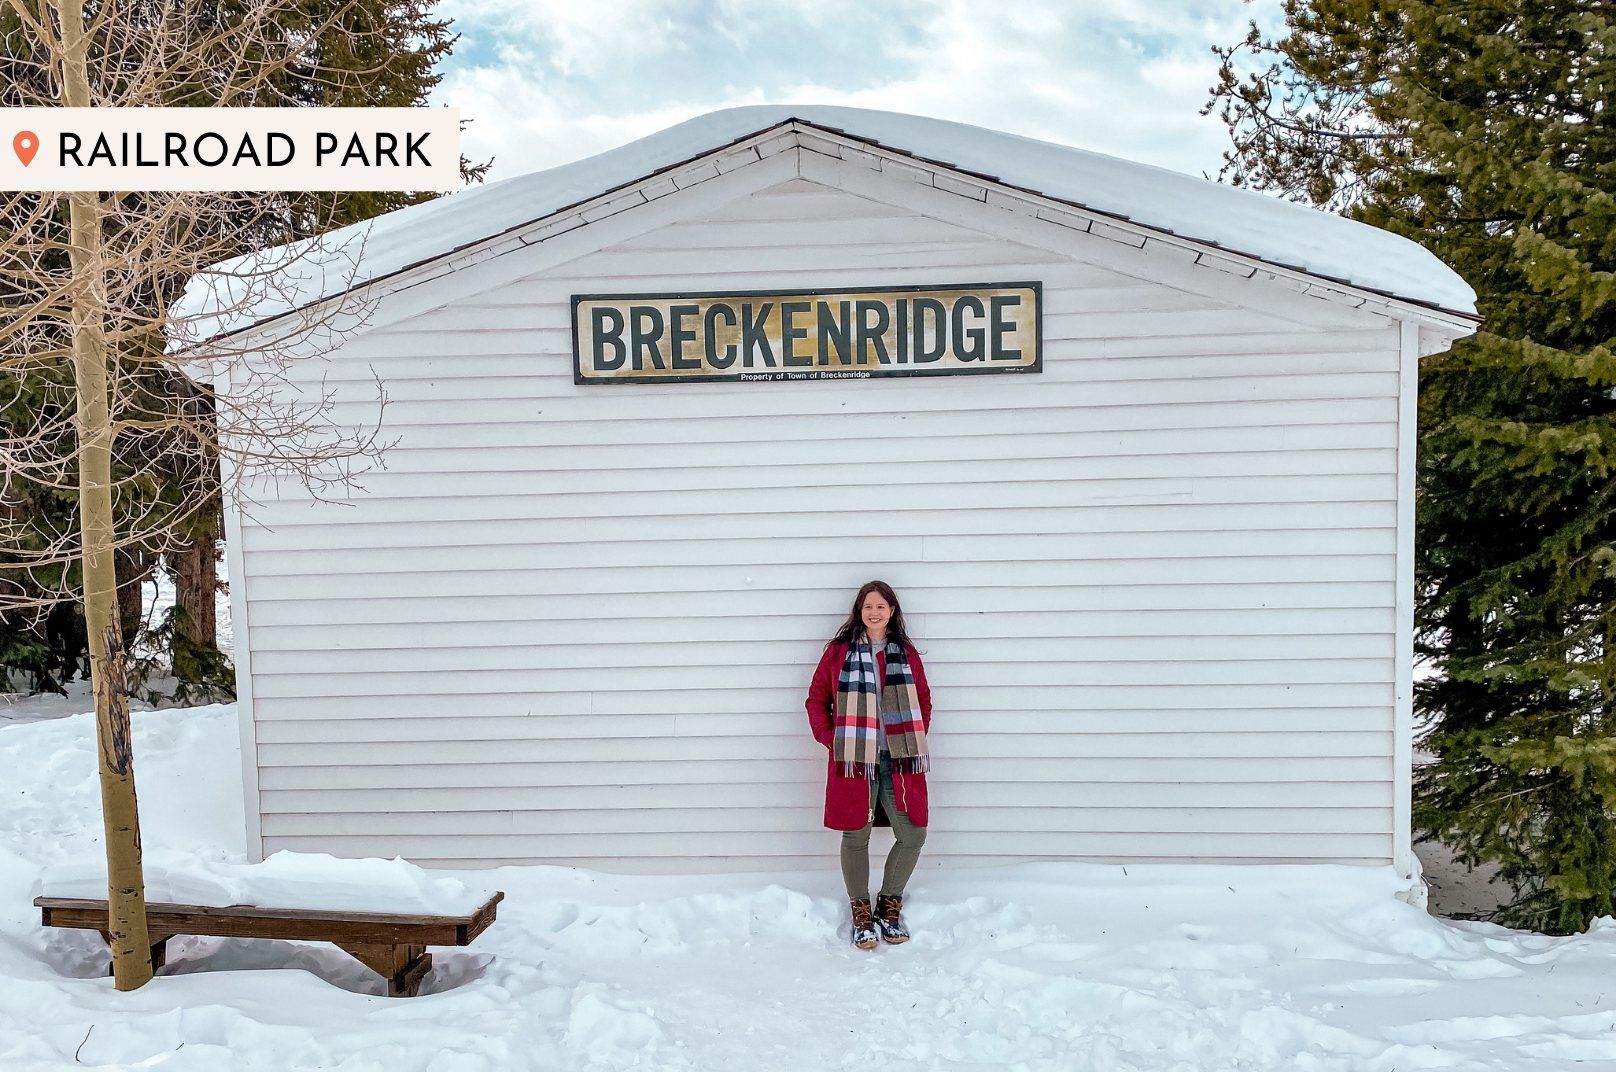 Pictures of Breckenridge, Colorado To Inspire Your Next Trip